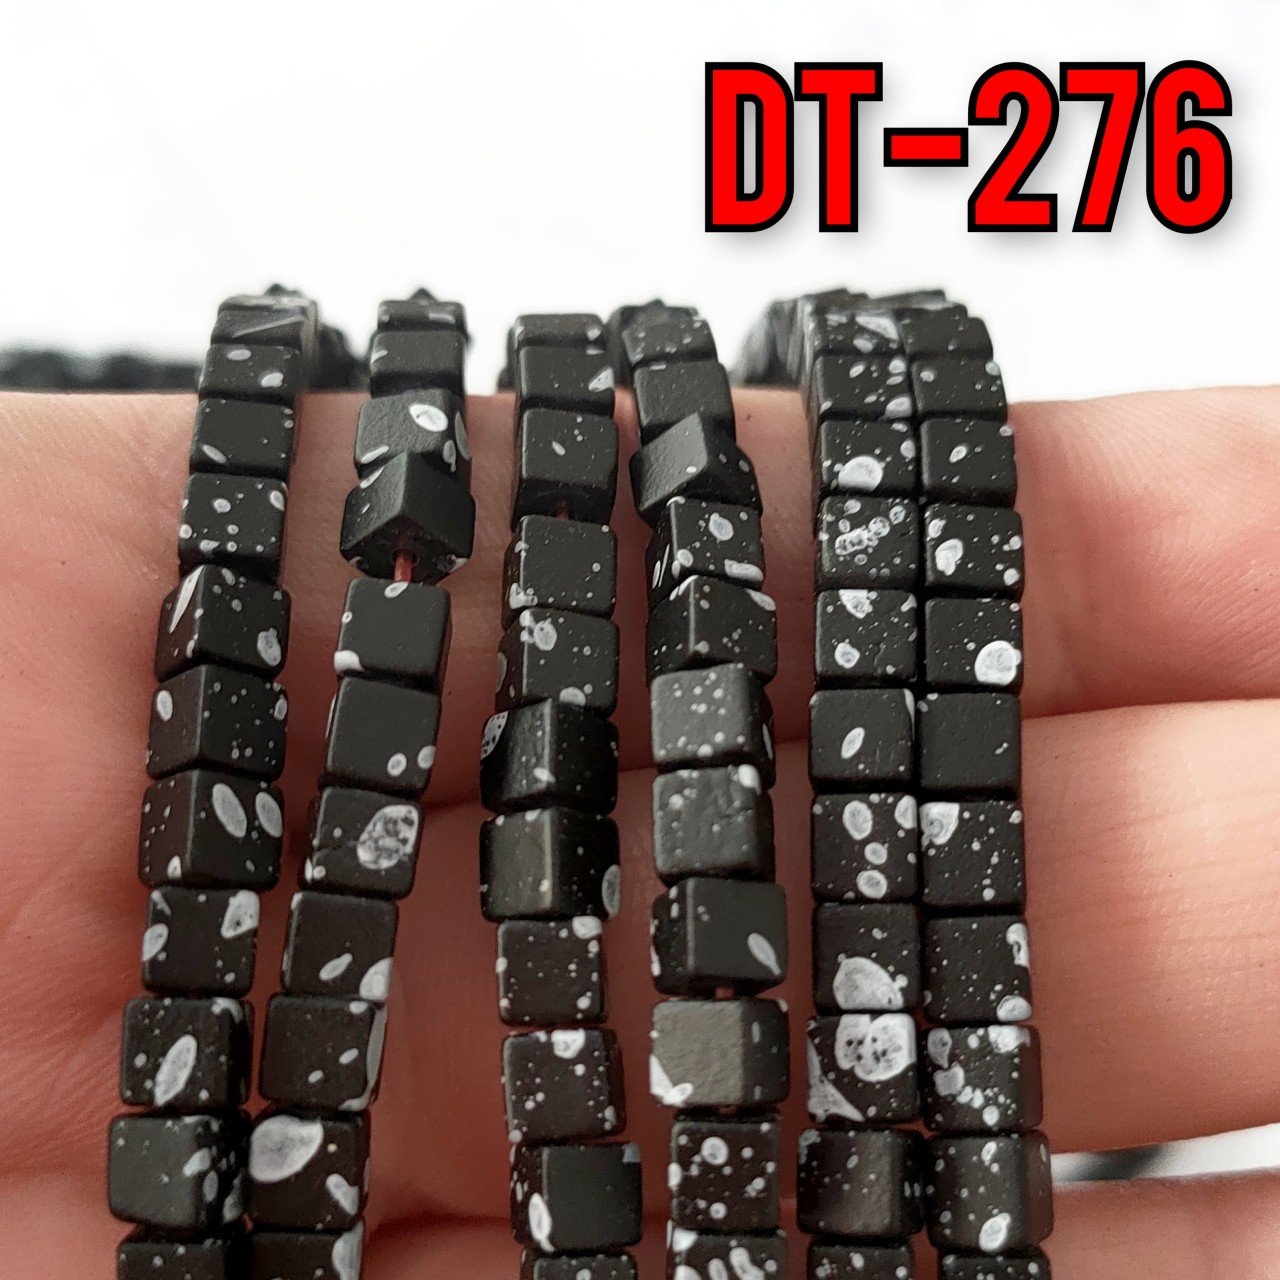 DT-276 Mat Hareli Siyah Küp Hematit Dizi 4 mm